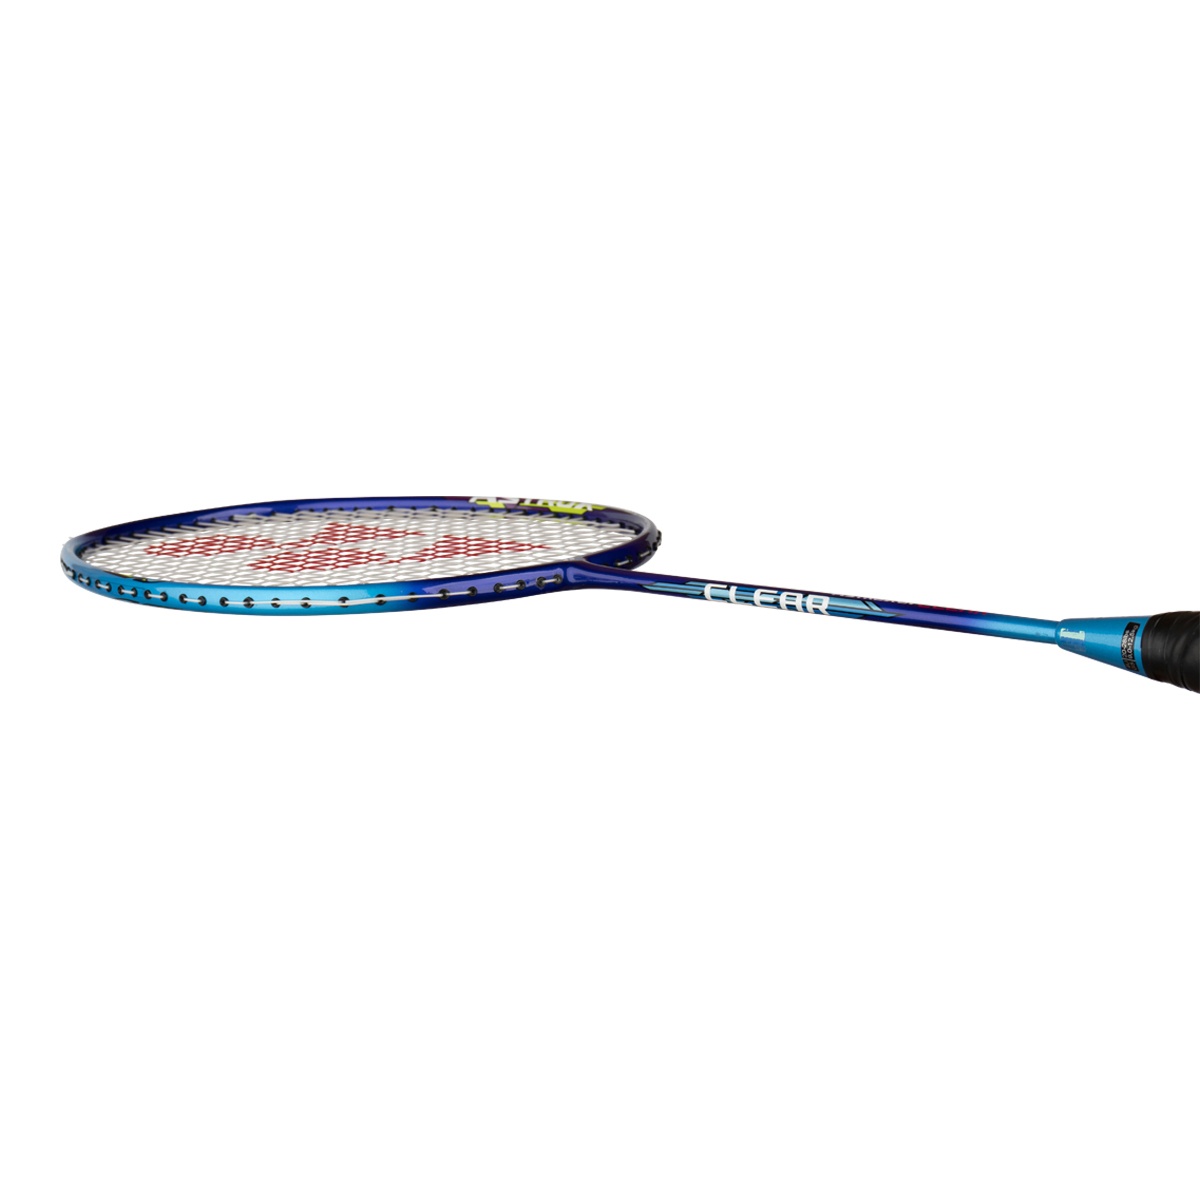 YONEX Astrox 01 Clear Badmintonschläger - Besaitet